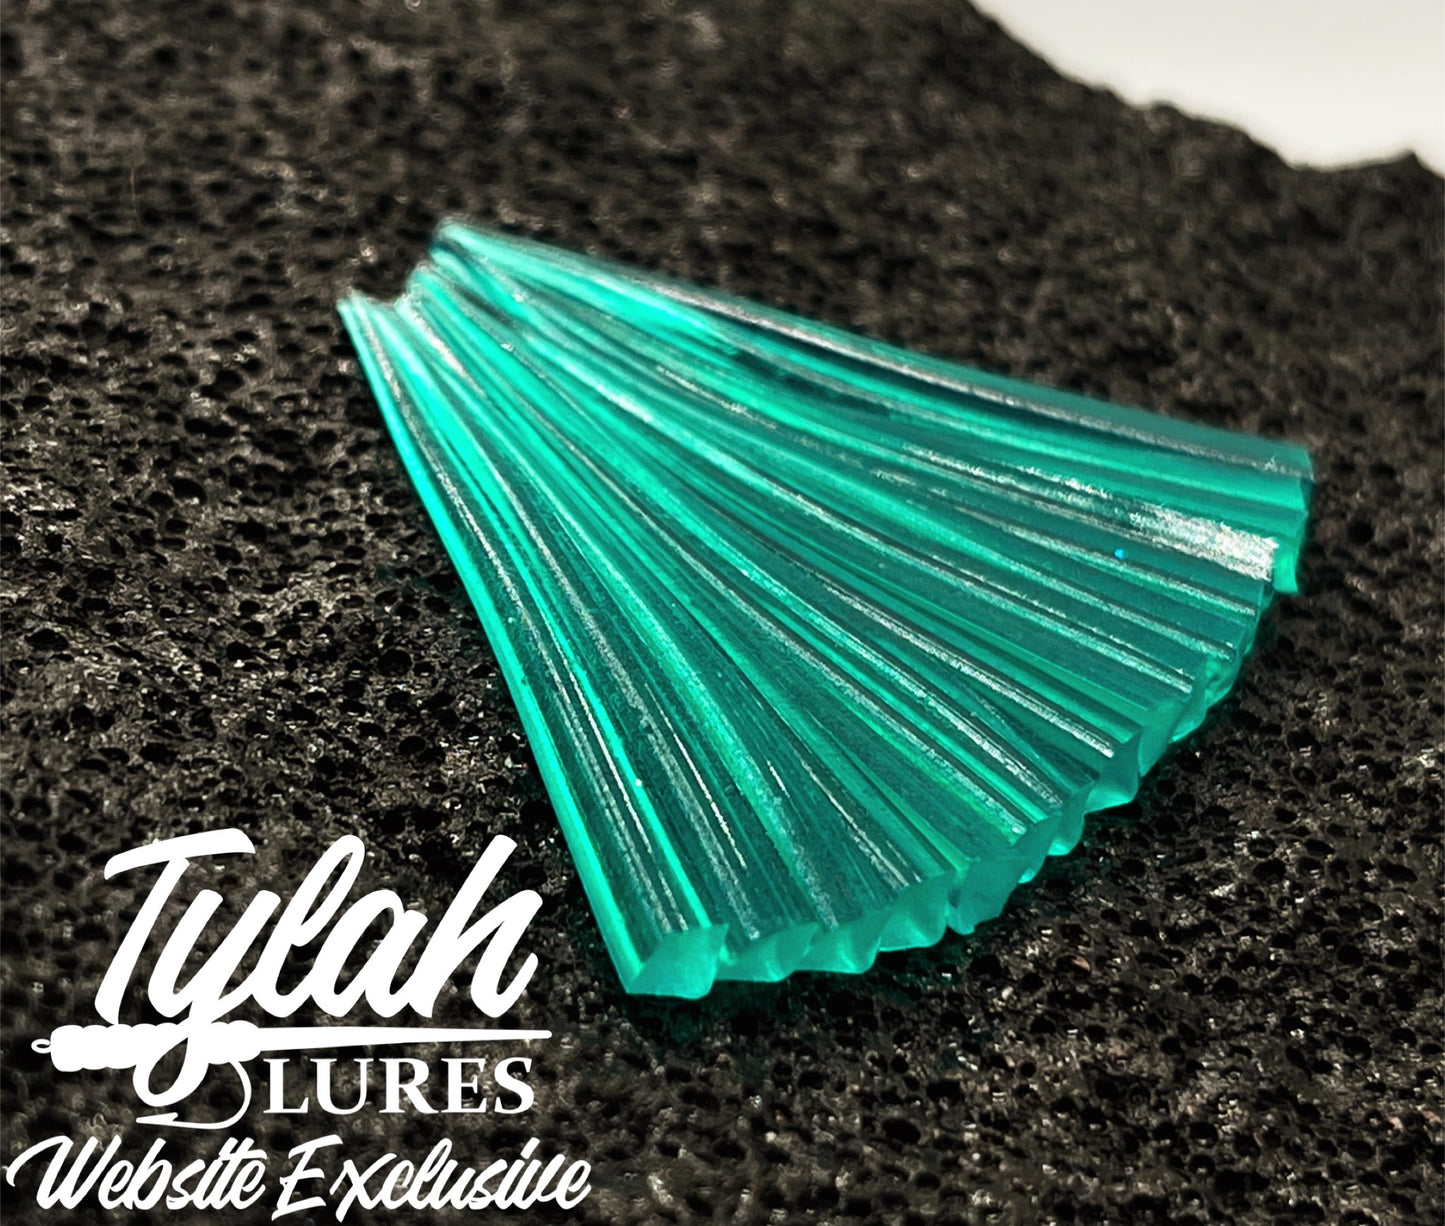 TylahLures Website Exclusive 1.5Inch UV Aqua Bulk Strips